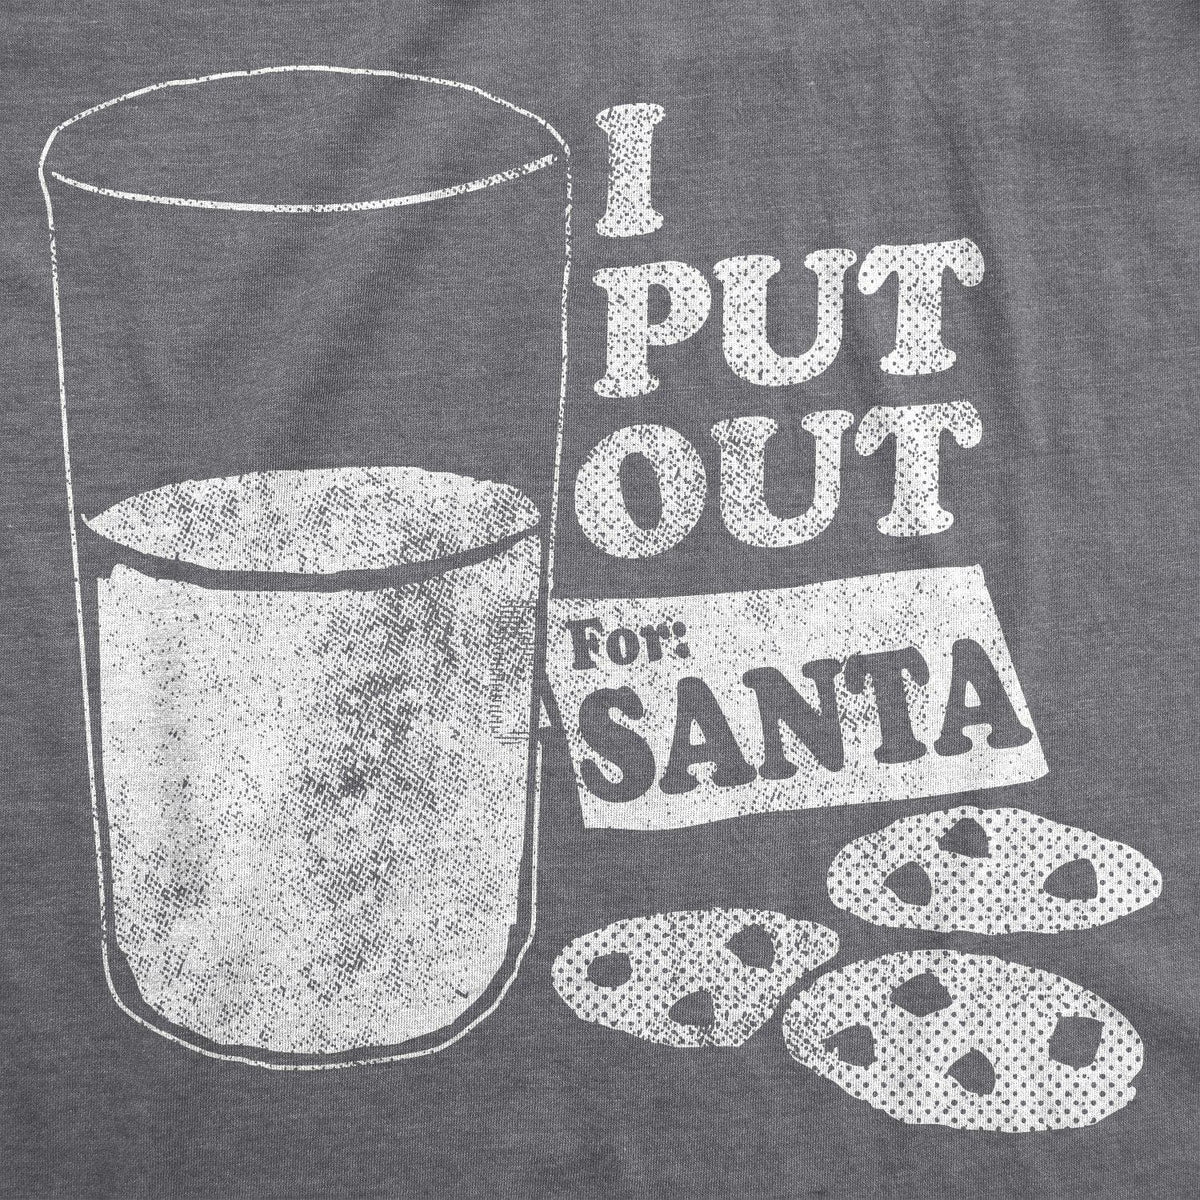 I Put Out For Santa Men&#39;s Tshirt - Crazy Dog T-Shirts